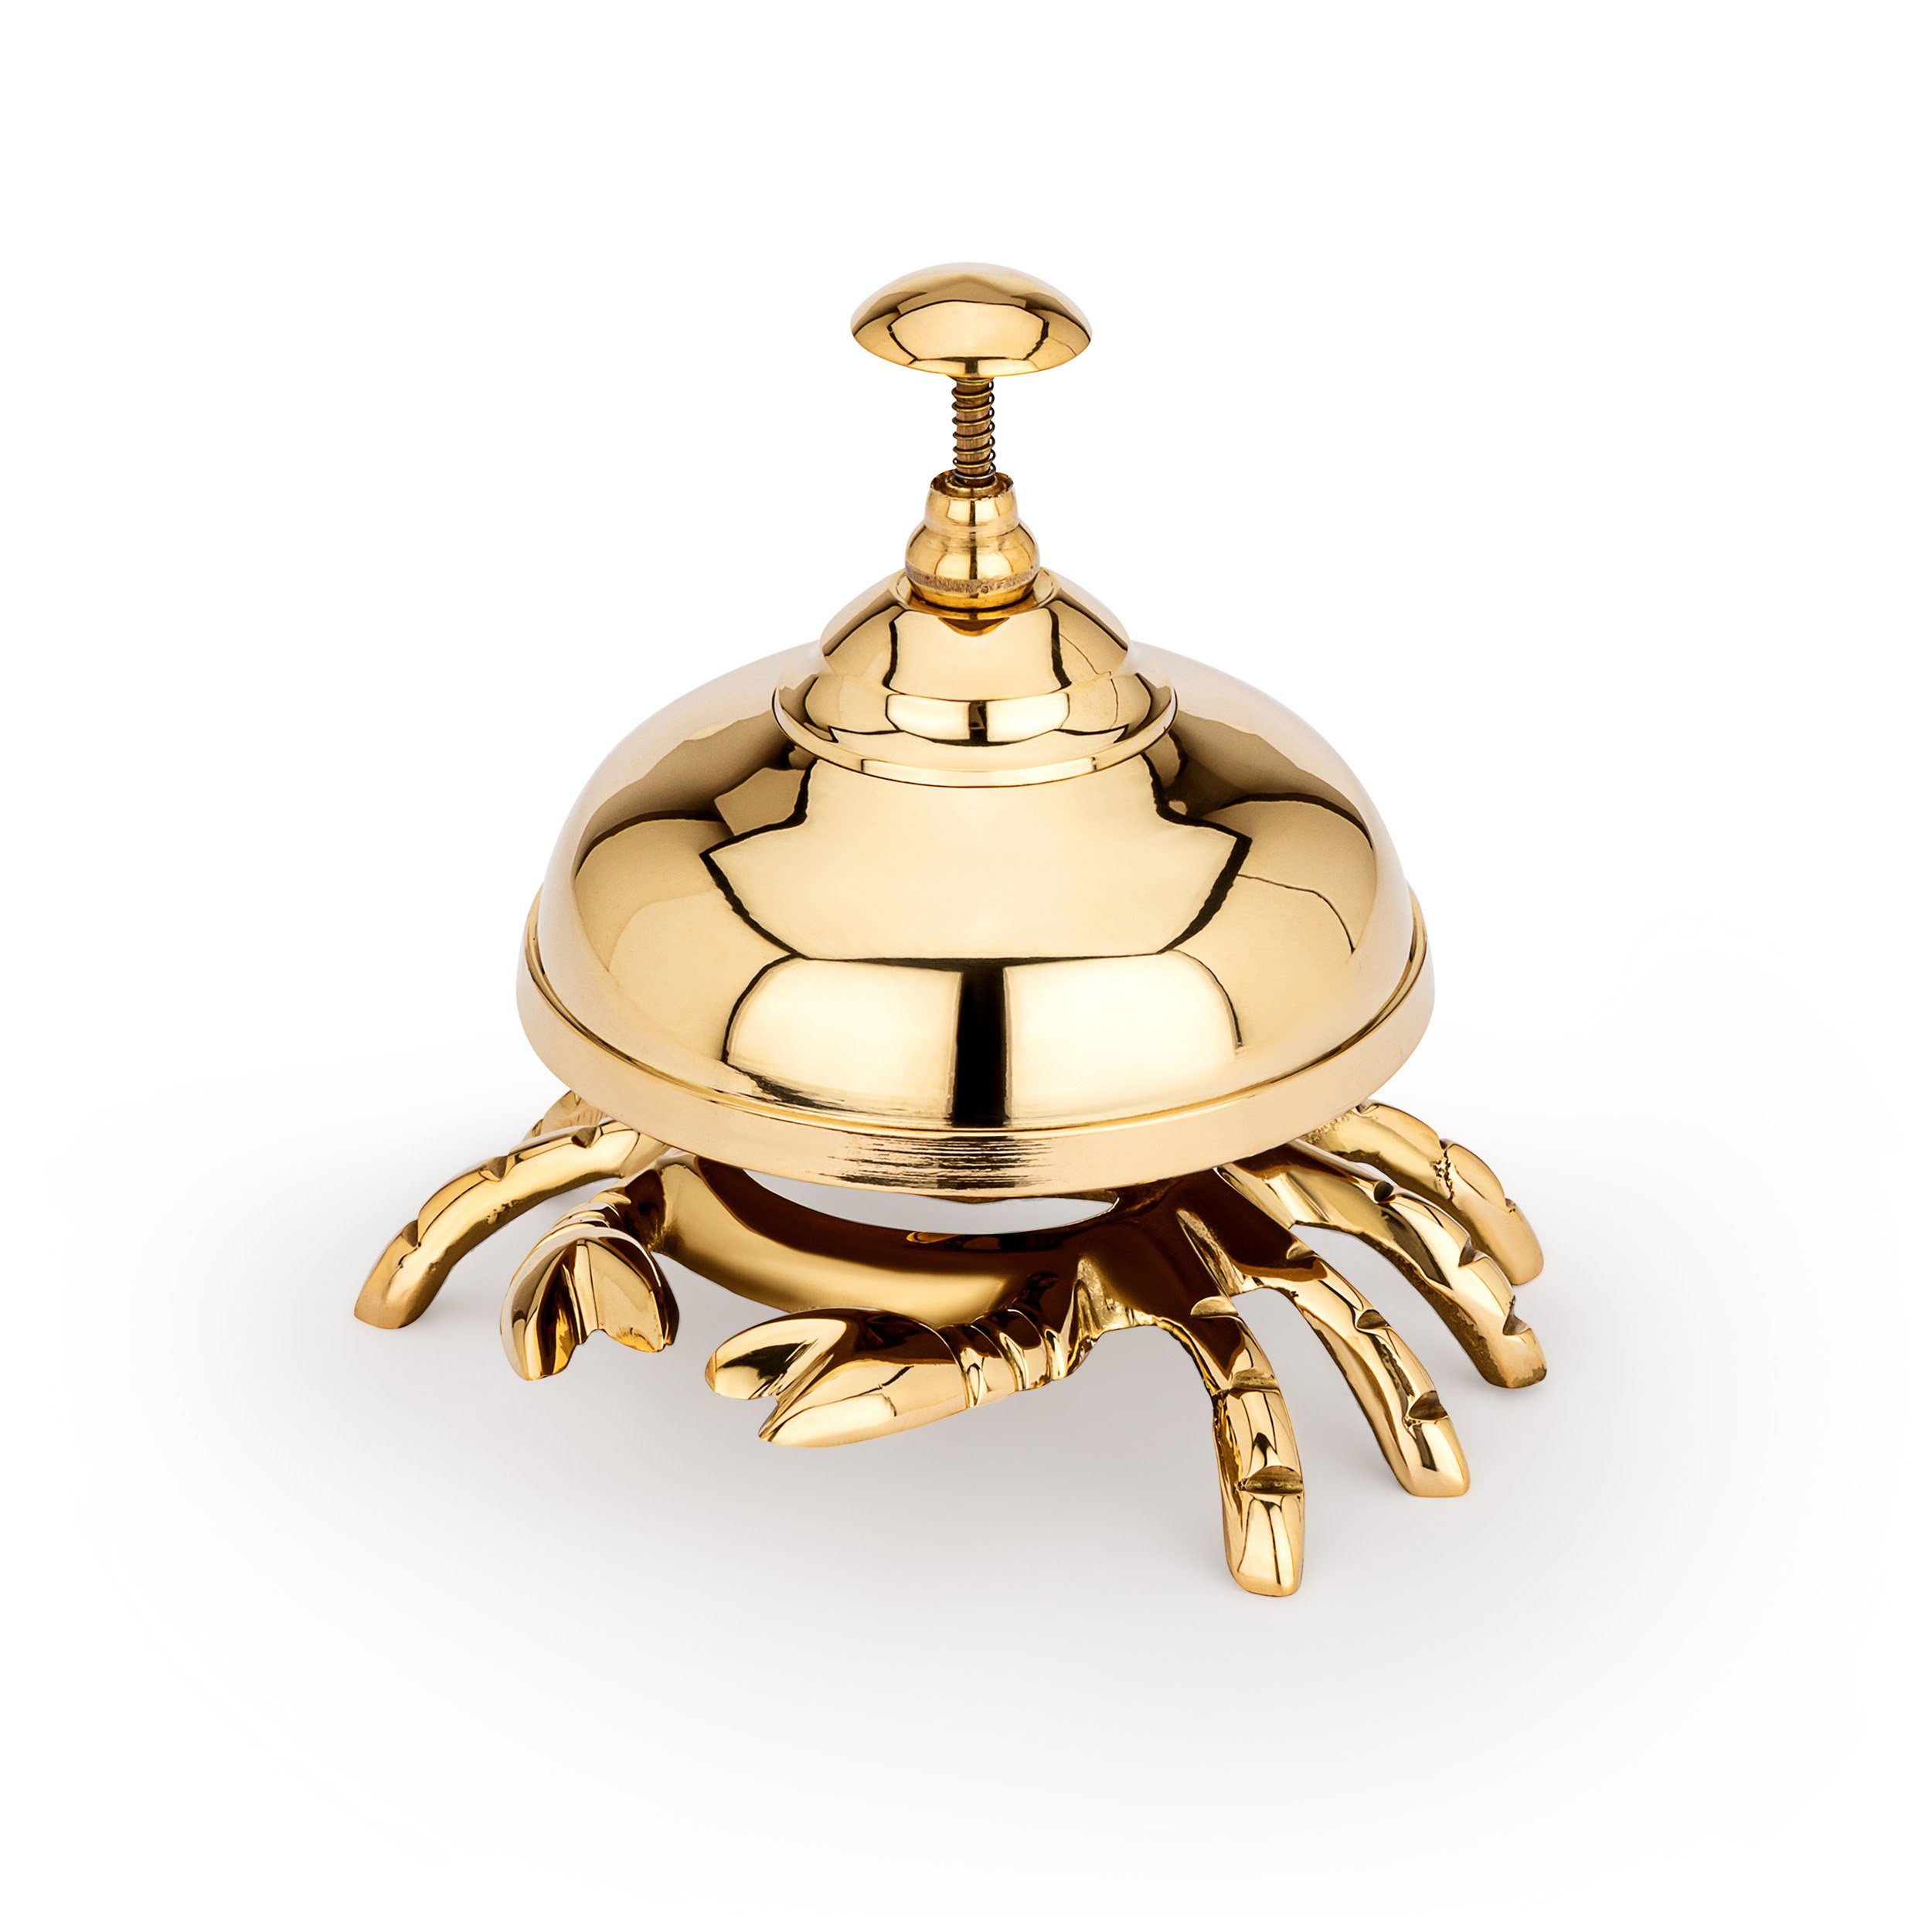 Tischgloc Dekofigur Tresenglocke Krabbe 9cm Messing Maritim aus NKlaus hoch gold massiv